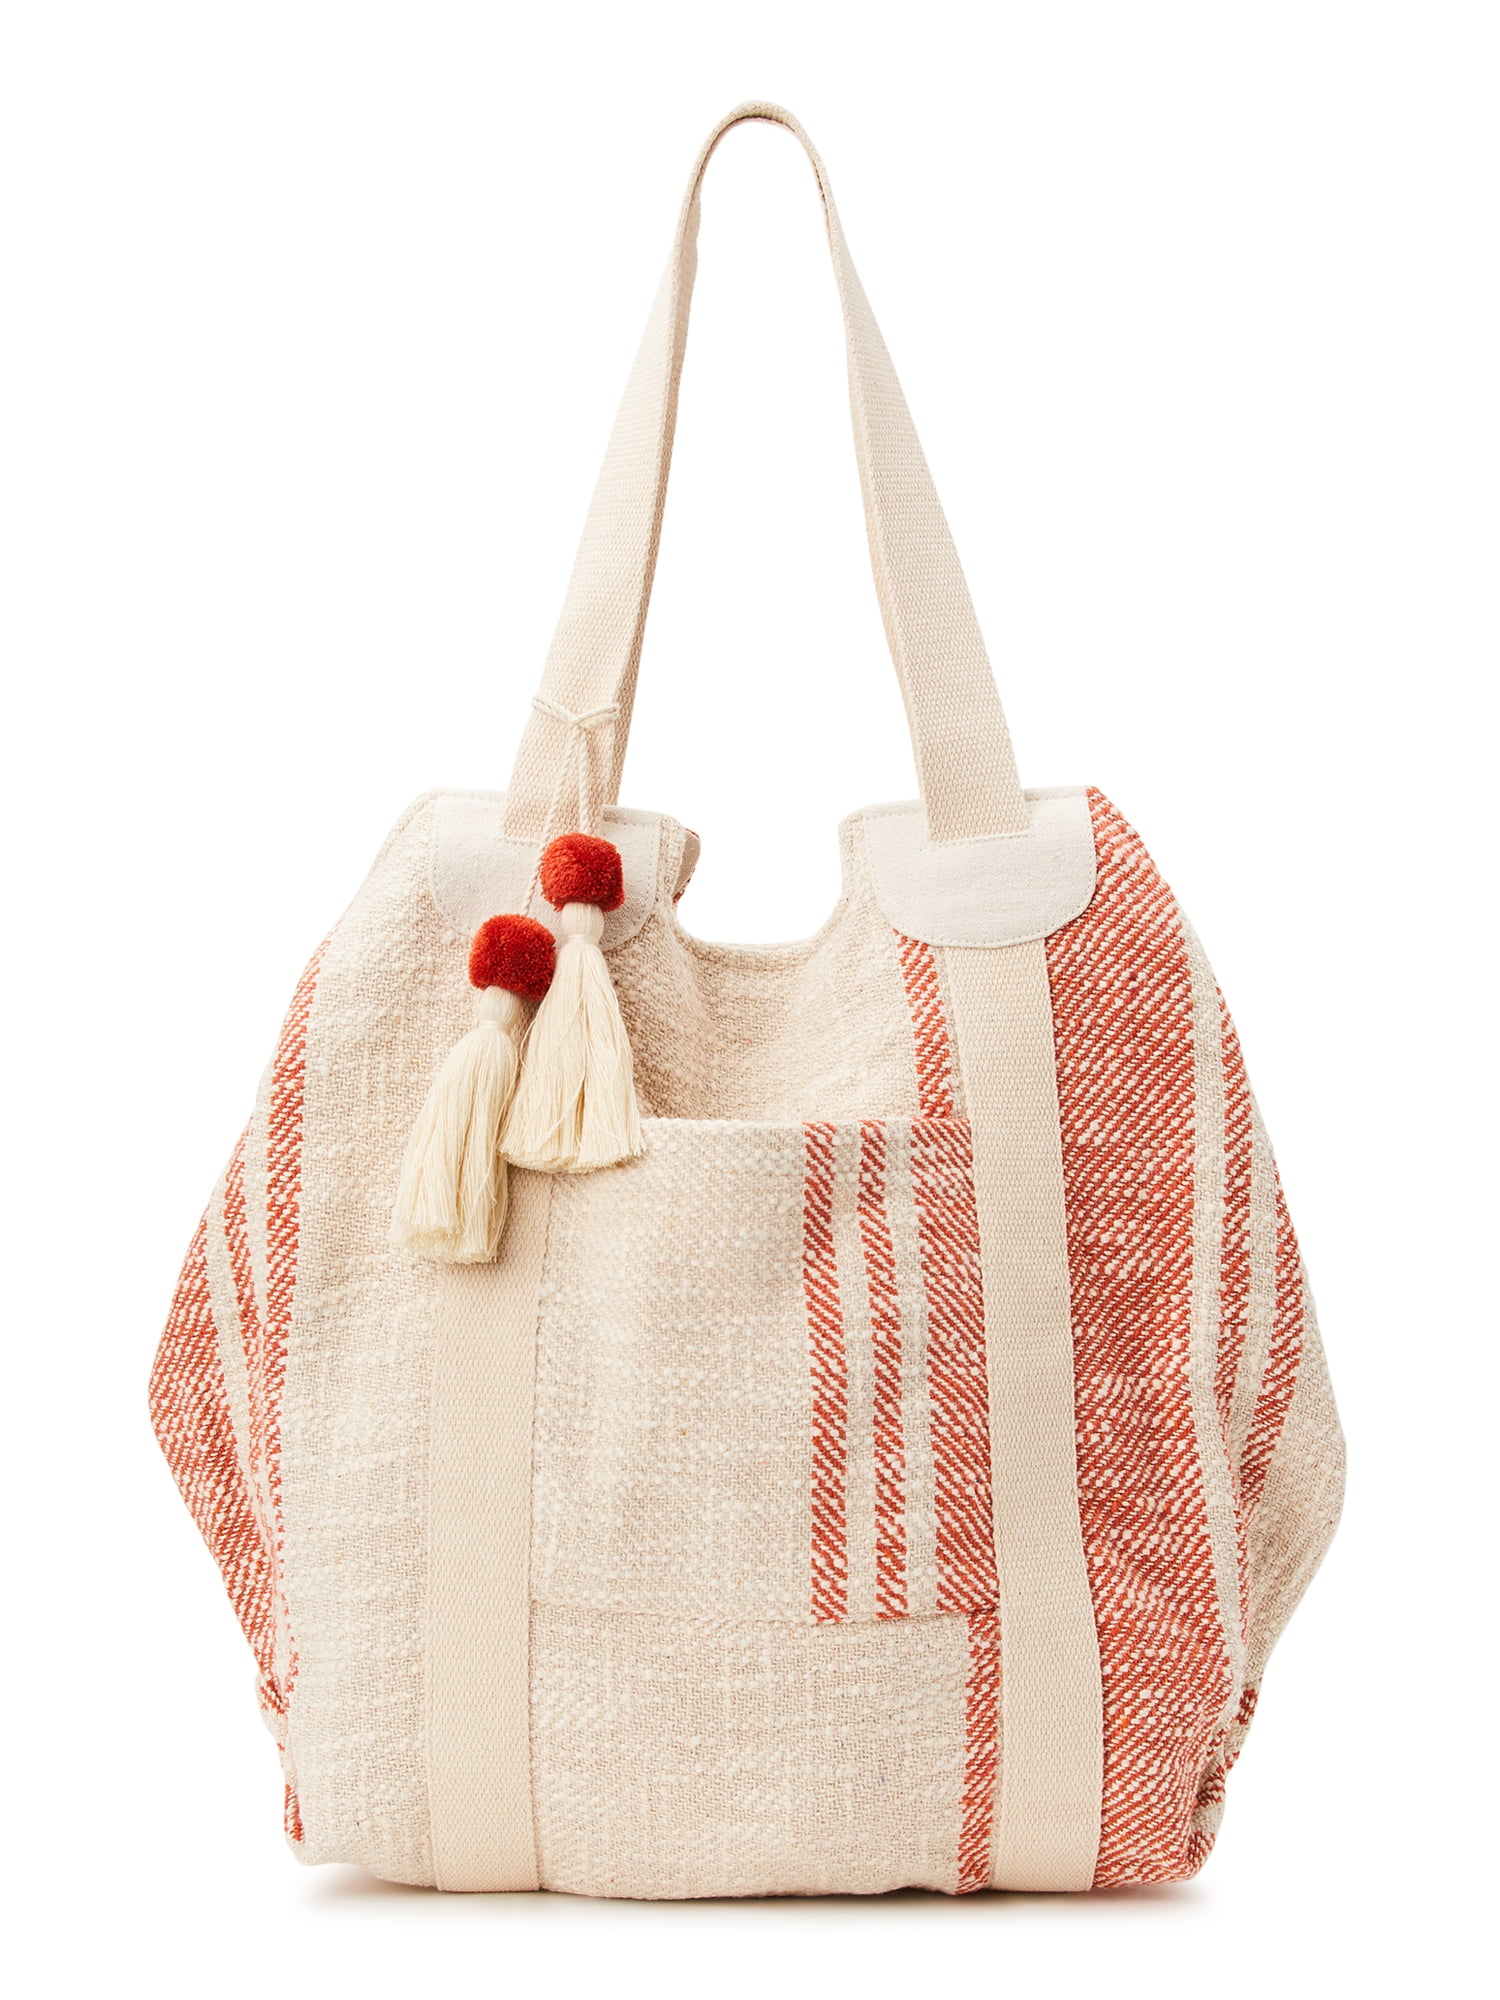 Mila Kate Top Handle Satchel Bags for Women | Women's Shoulder Purses and Handbags | Black Messenger Tote Bag for Ladies | Medium 13.5 x 10.3 x 5.5